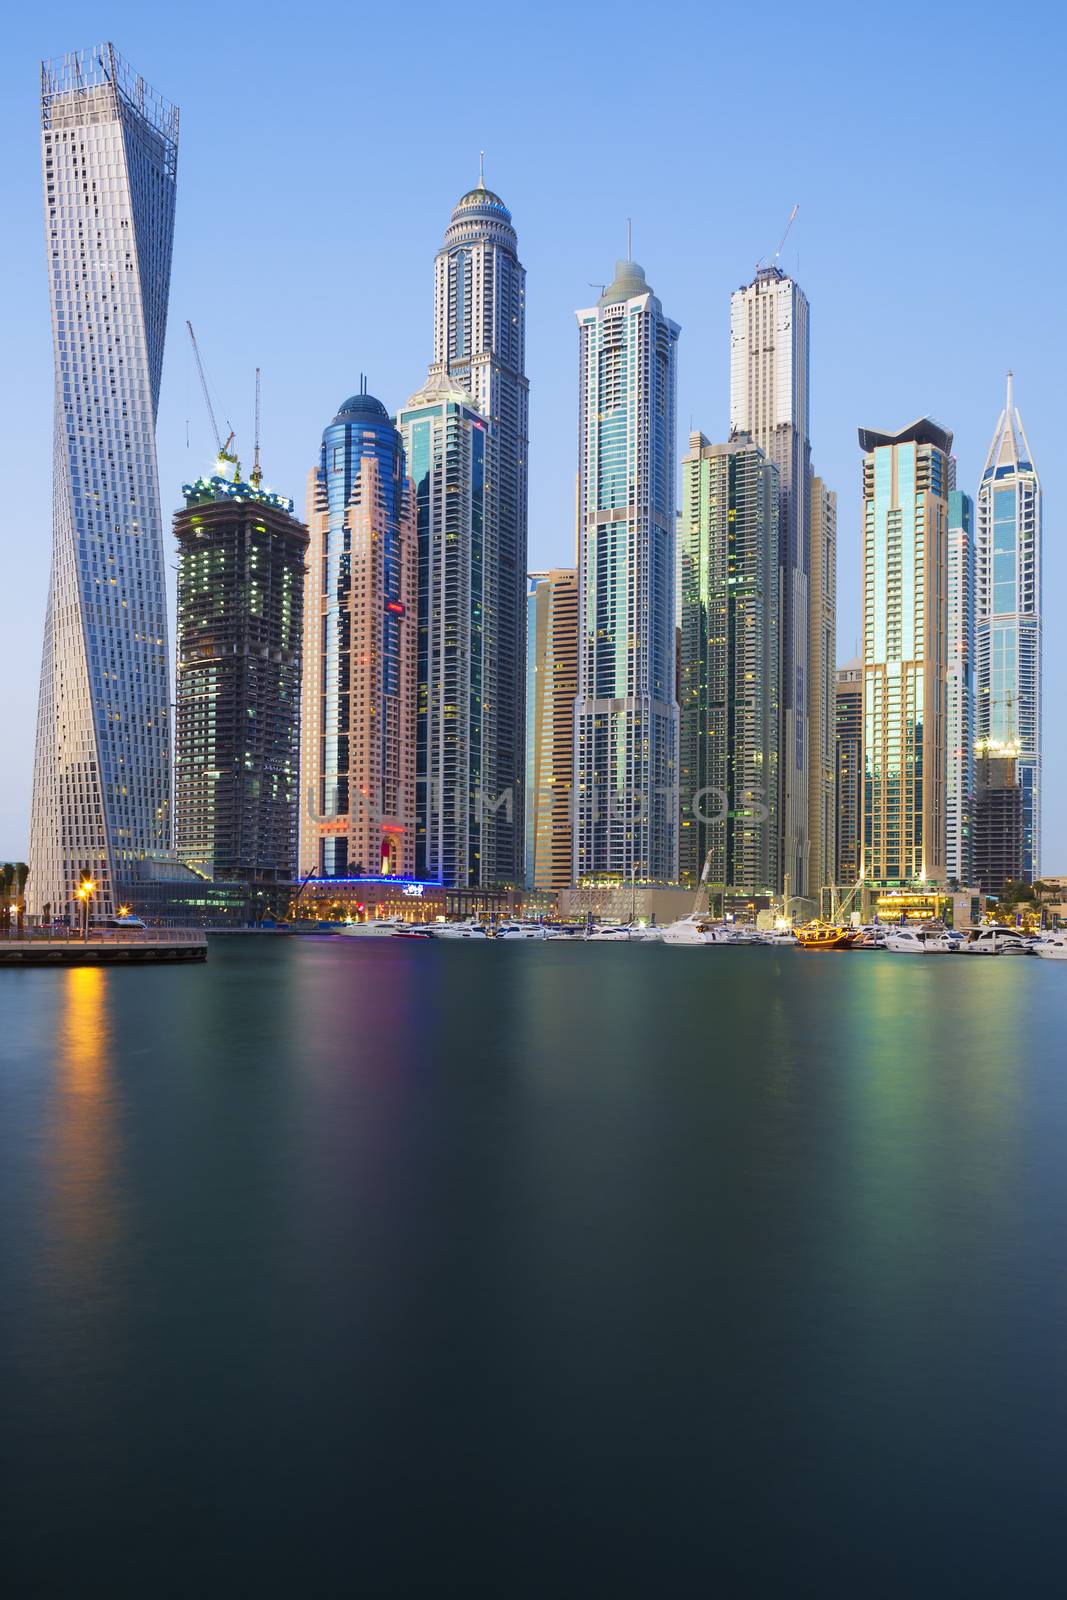 Vertical view of Skyscrapers in Dubai, UAE.